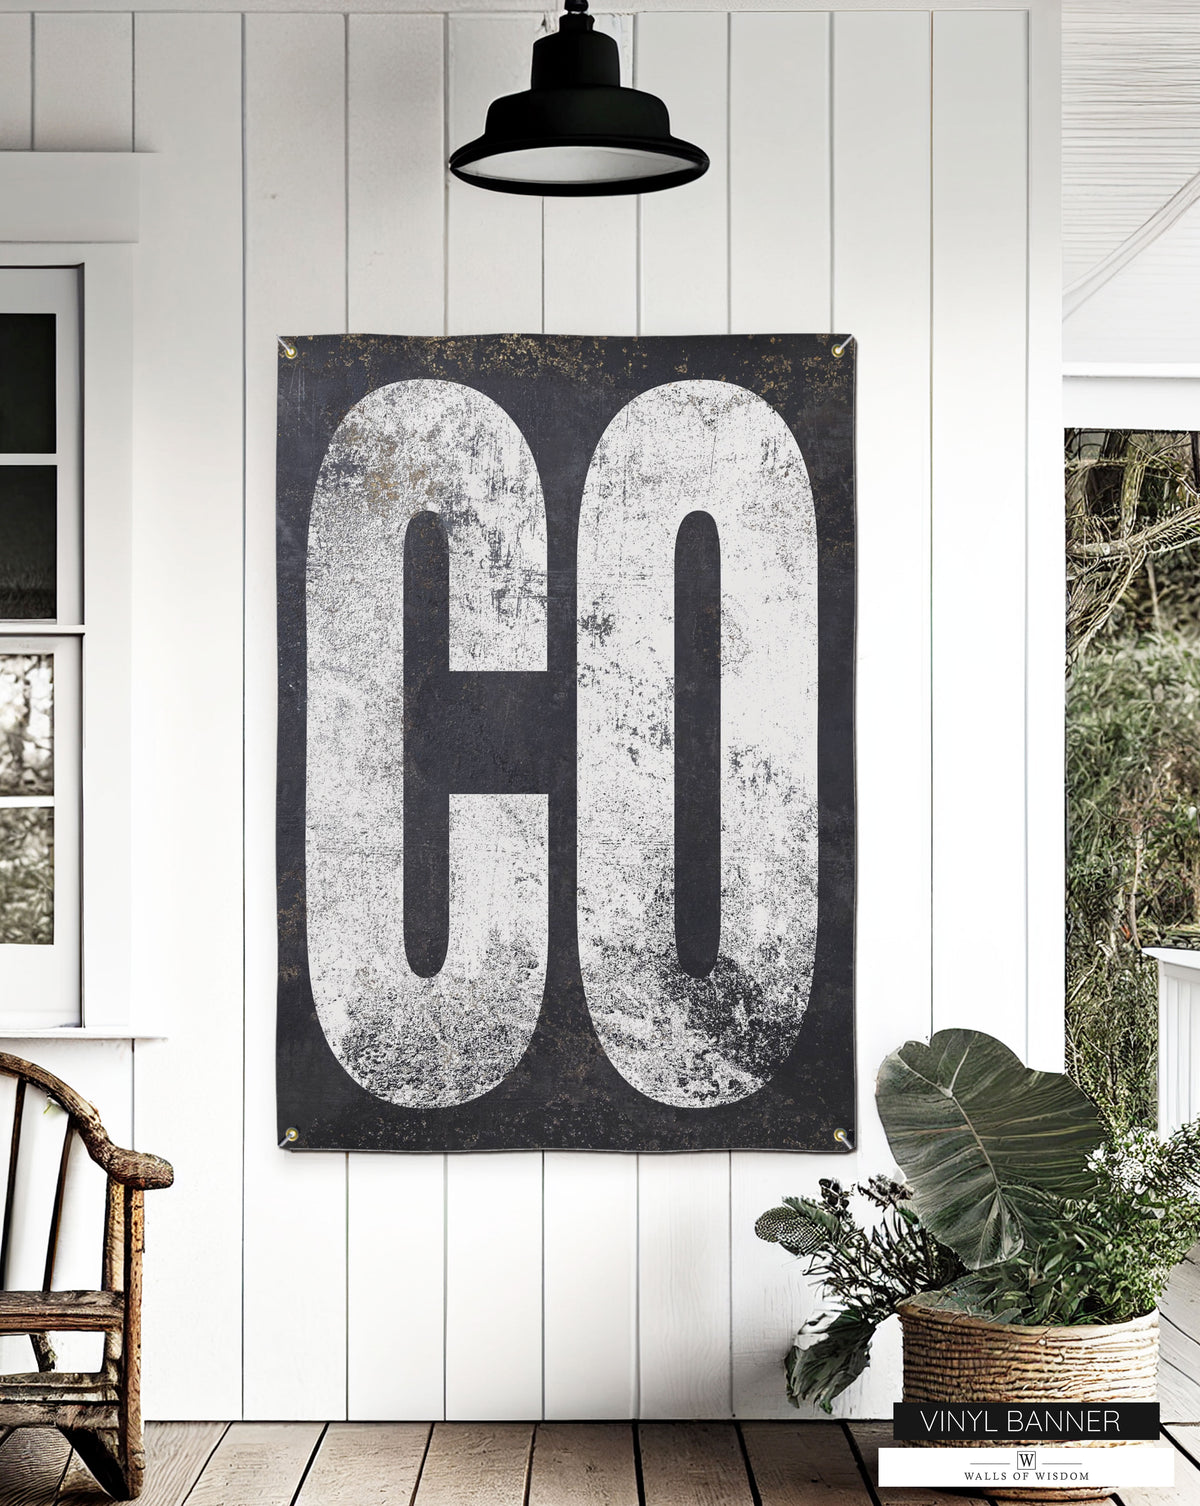 Colorado Alpine Elegance: Durable Outdoor Art Vinyl Banner for Home